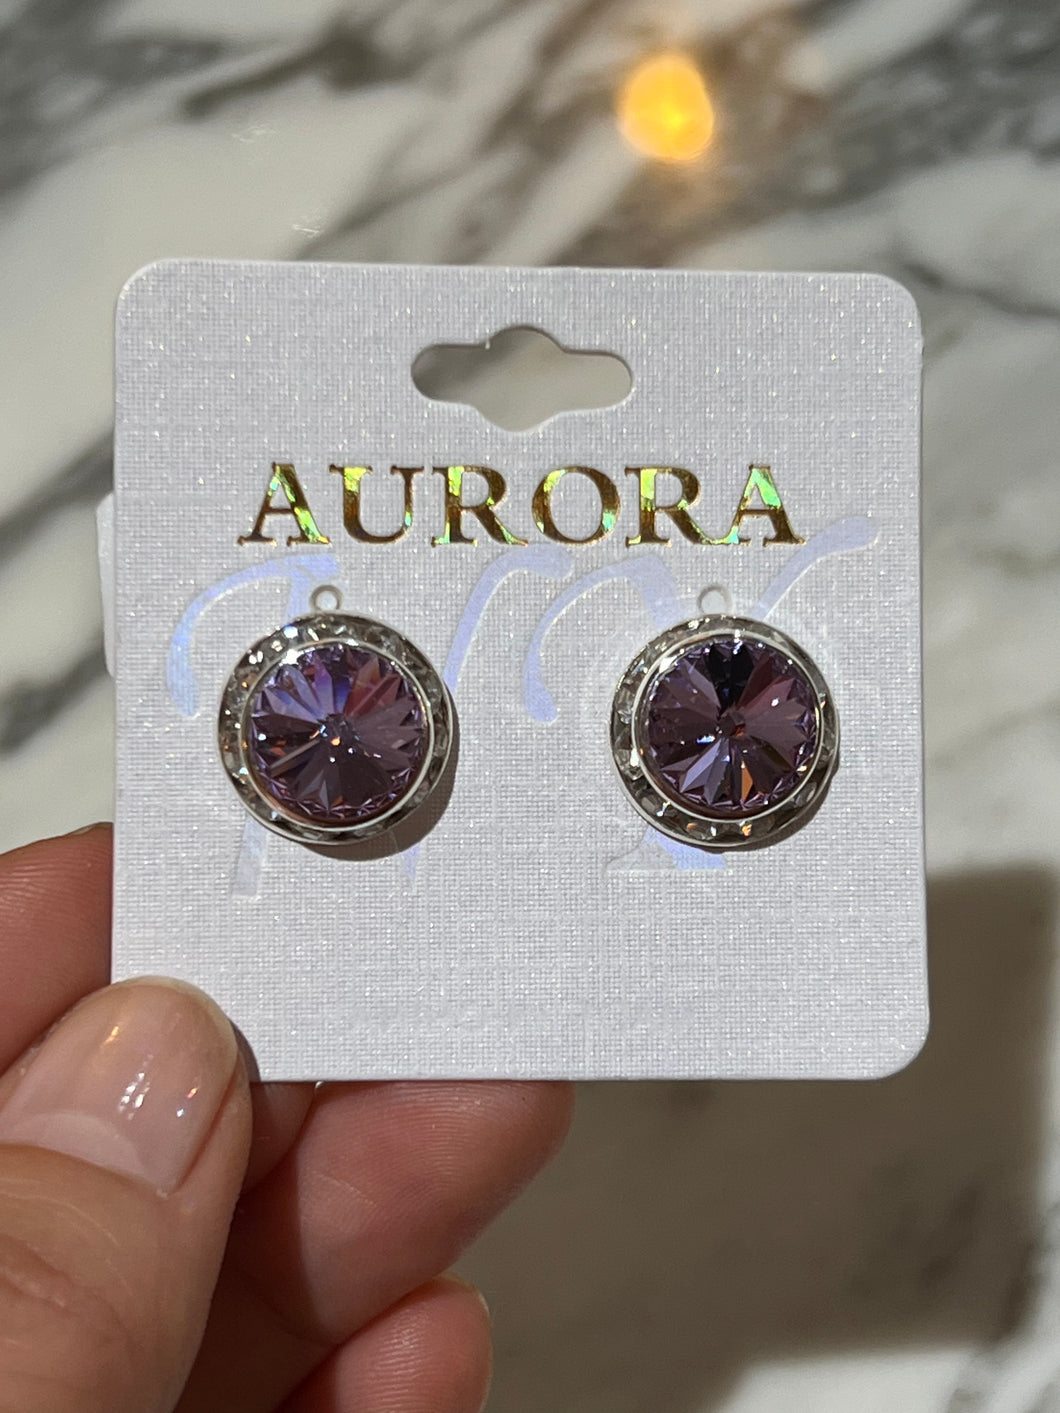 Aurorita Earrings